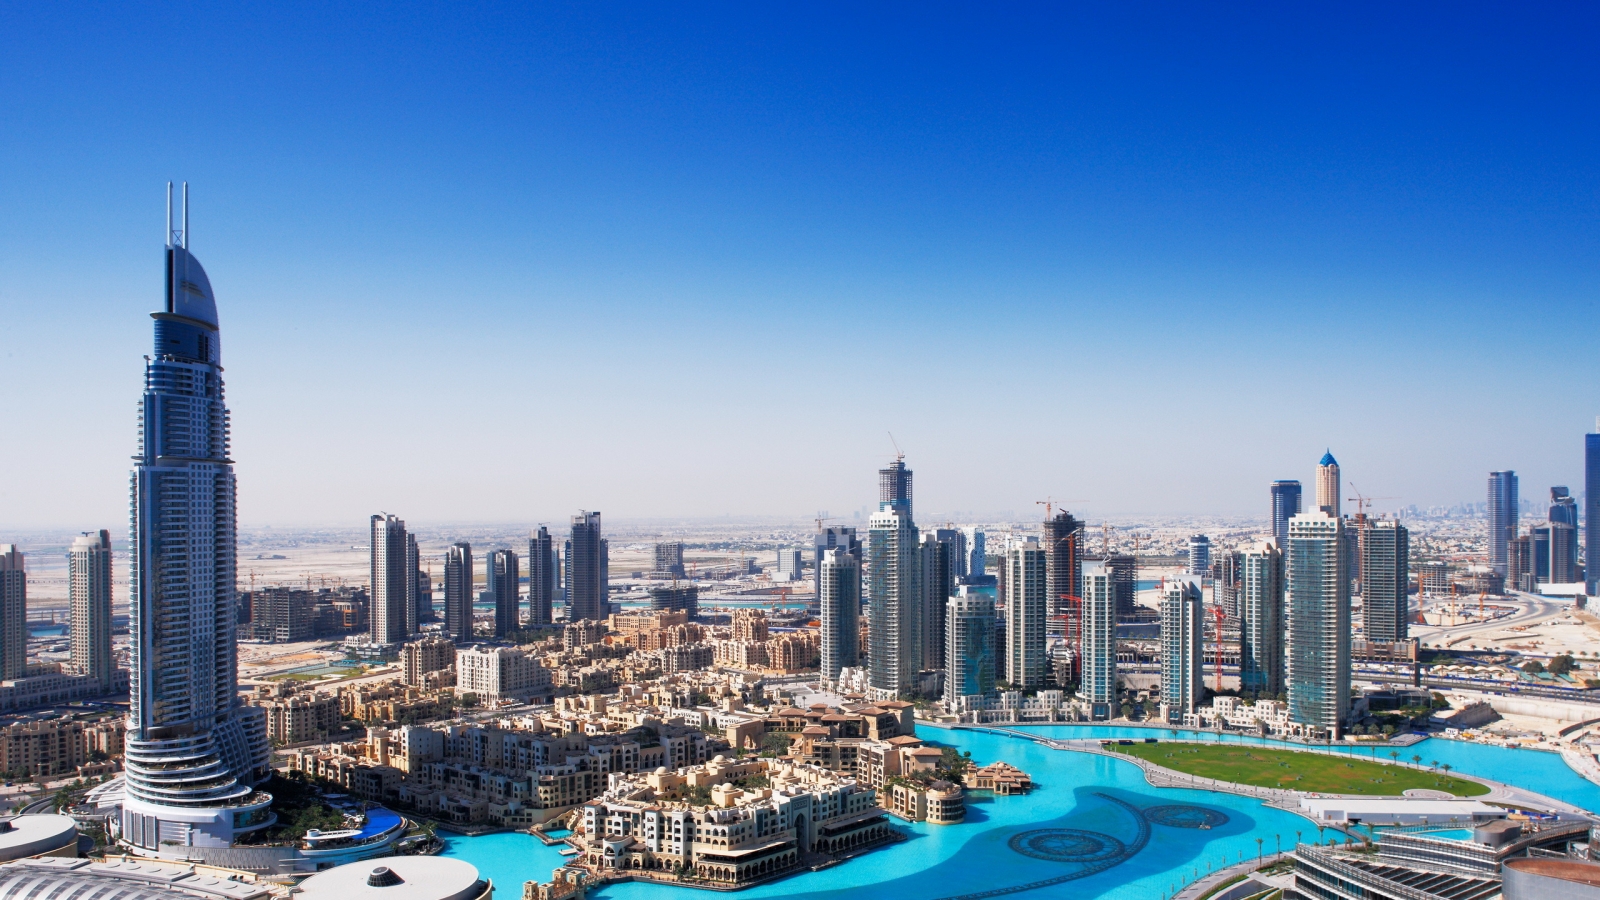 Dubai Overview for 1600 x 900 HDTV resolution